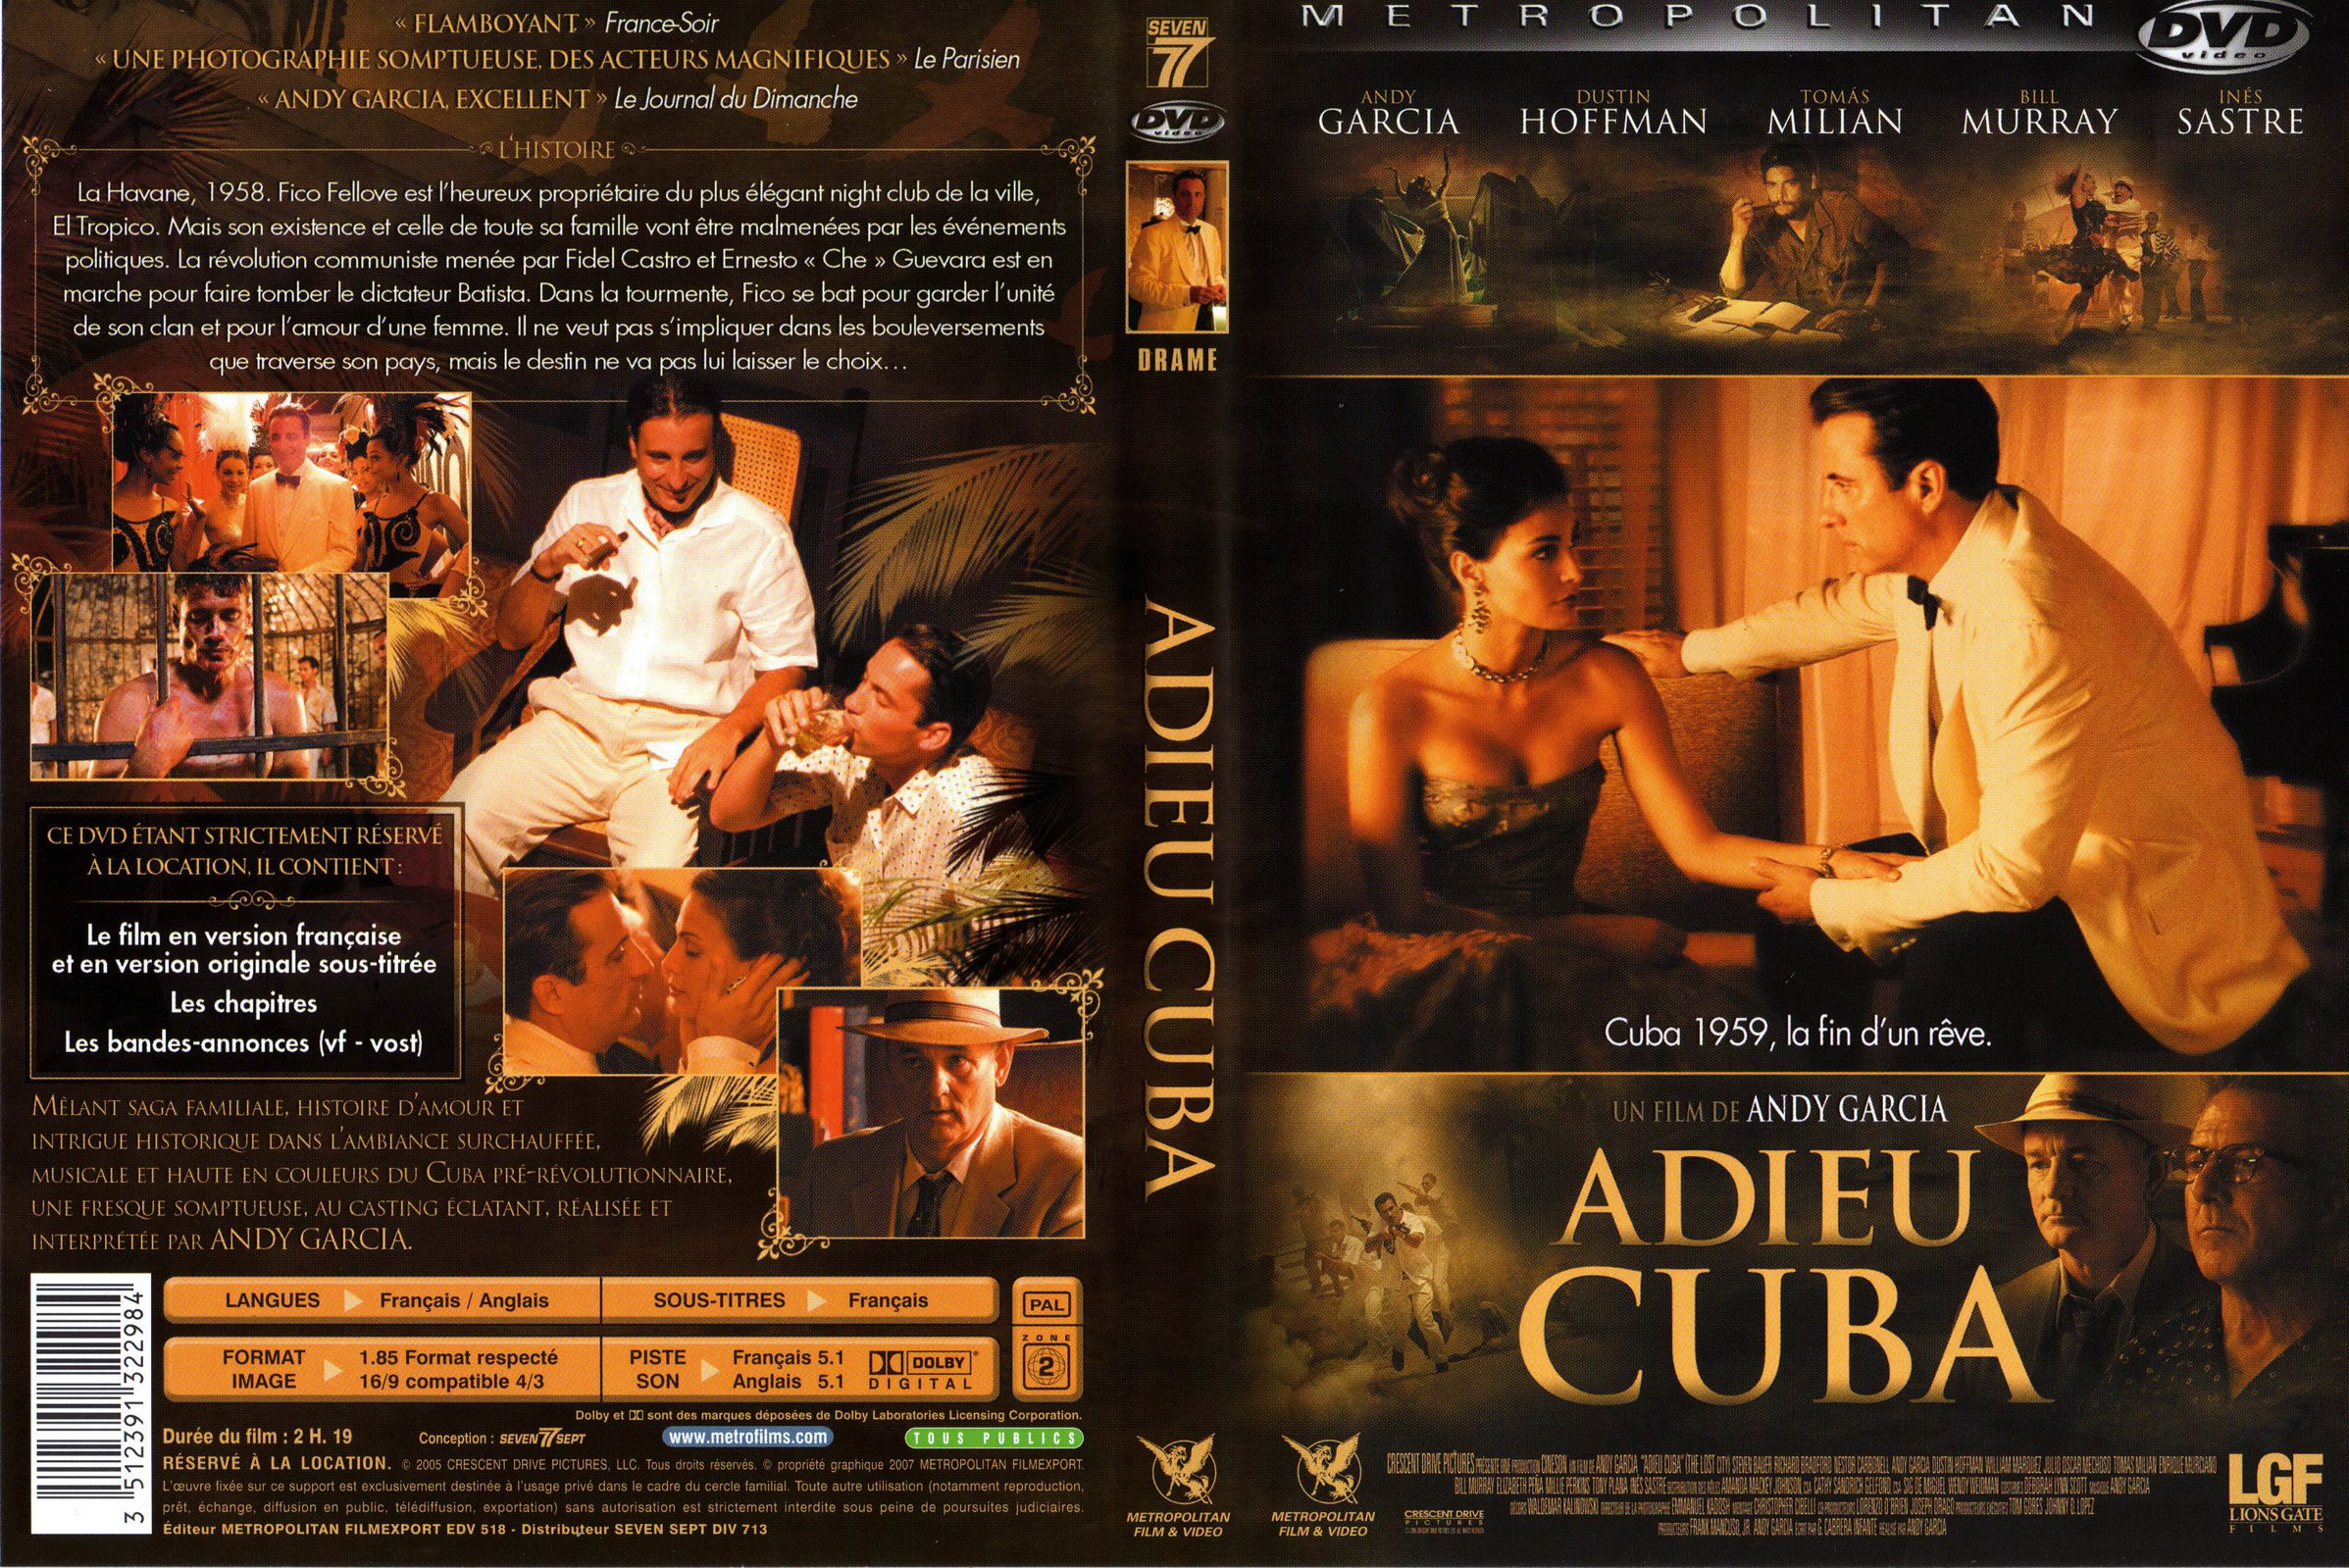 Jaquette DVD Adieu Cuba (BLU-RAY)